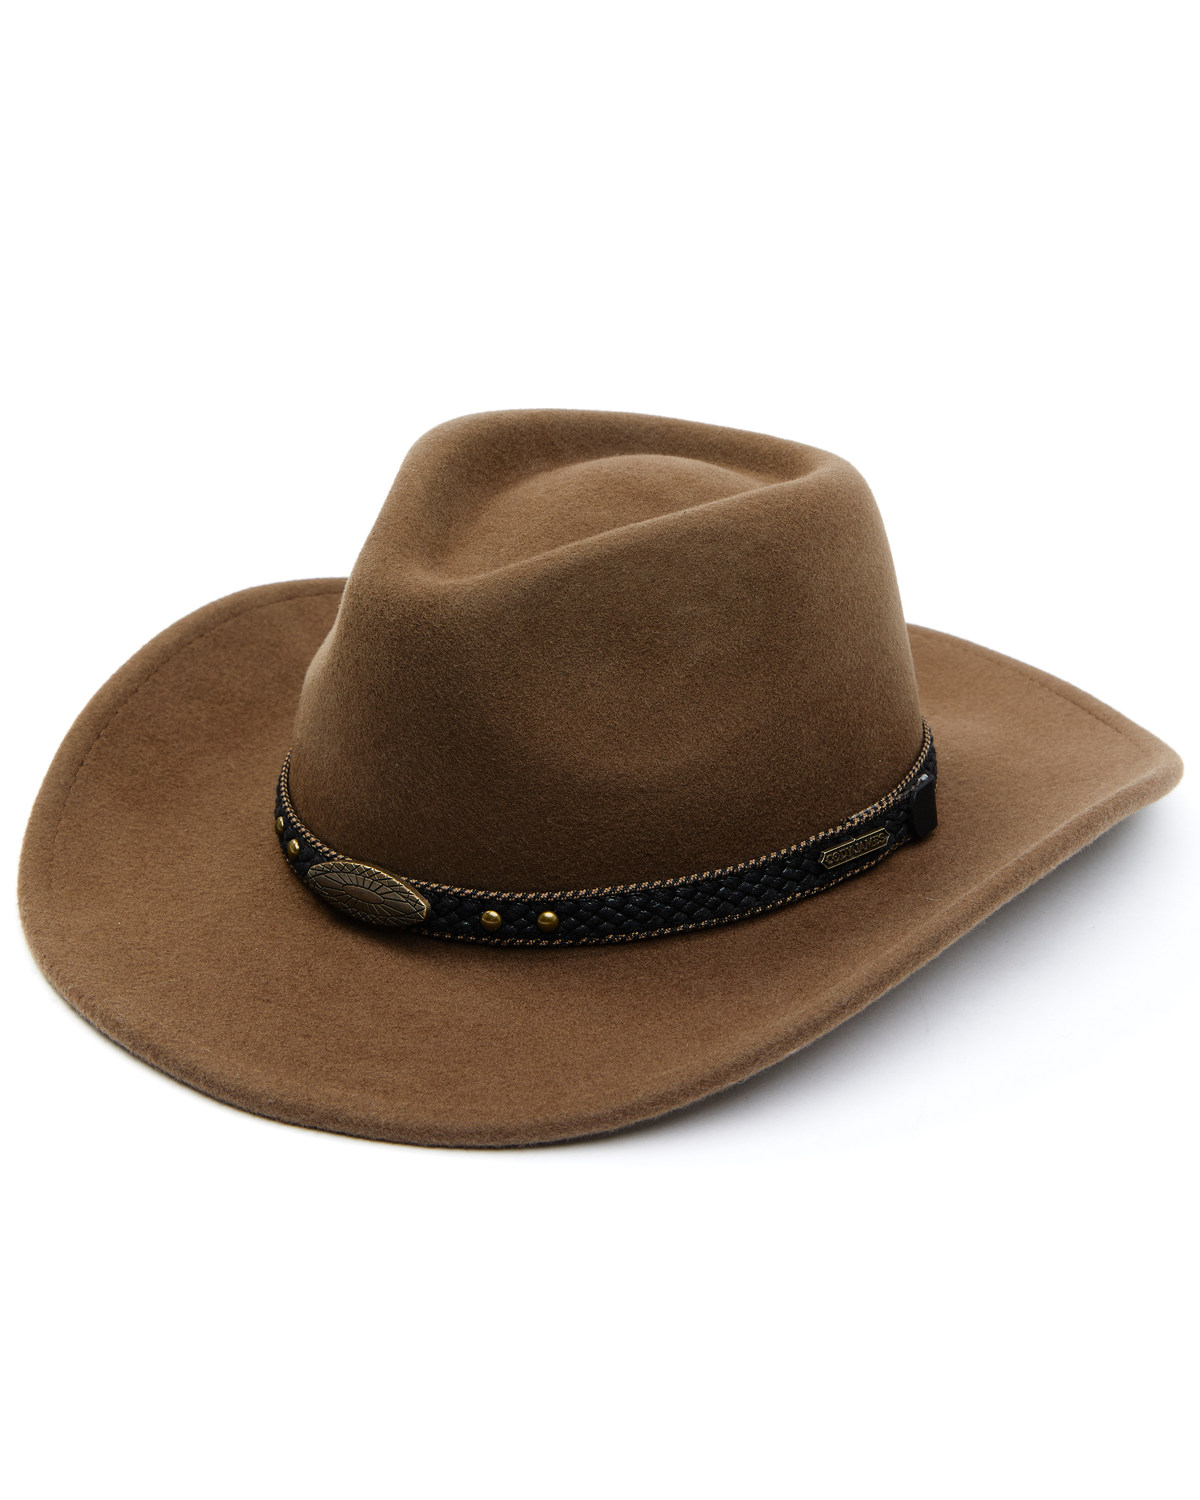 Cody James Men's Felt Western Fashion Hat